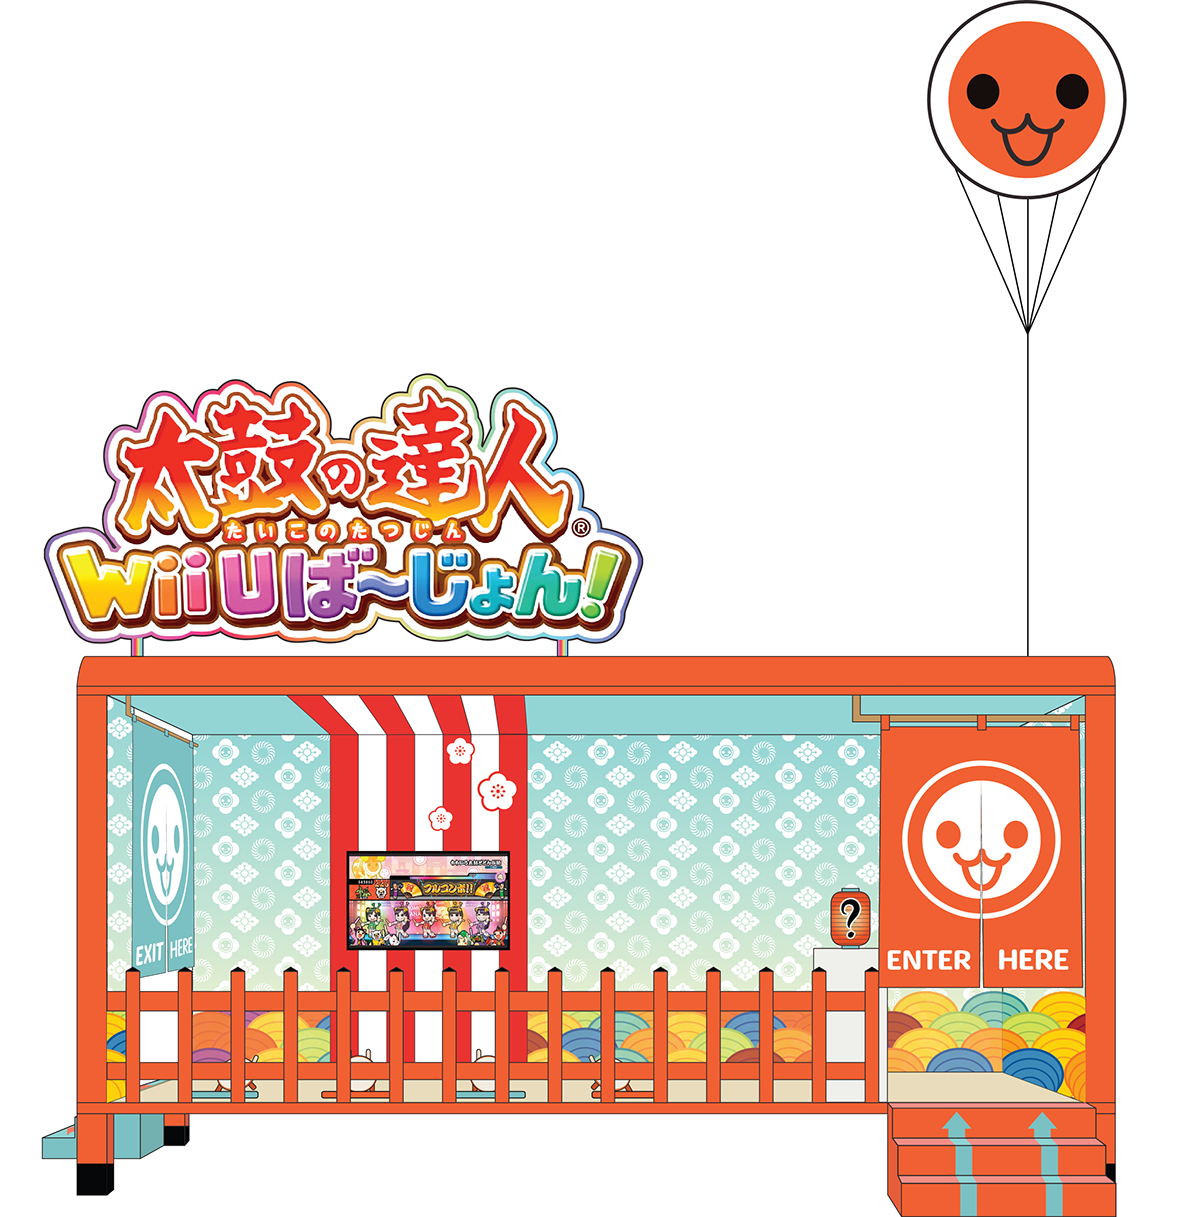 taiko taiko no tatsujin Wii U booth video game game japan japanese container repurposed wii